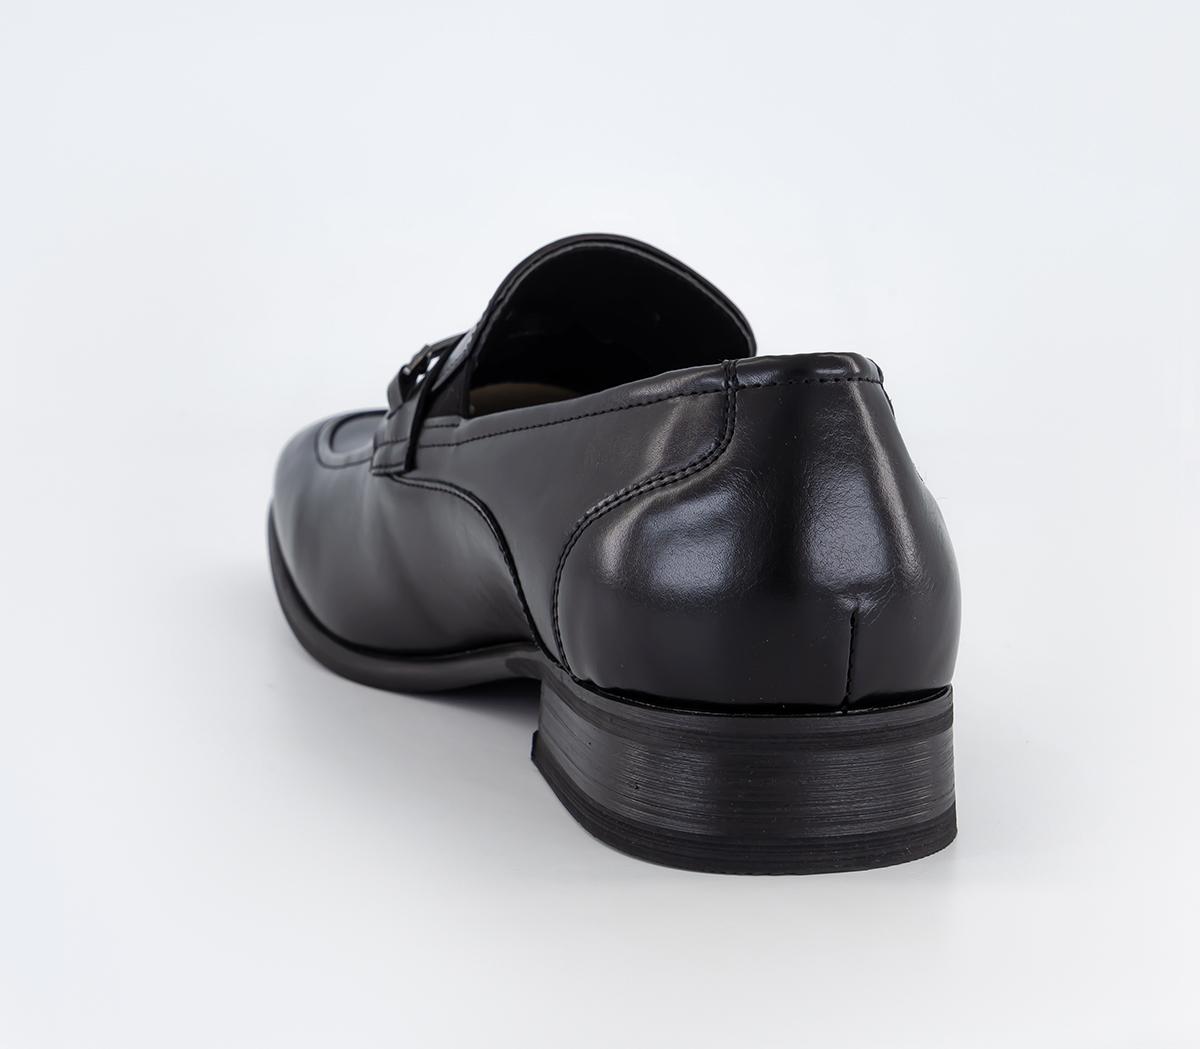 OFFICE Maywood Black Bar Apron Loafers Black - Men’s Smart Shoes